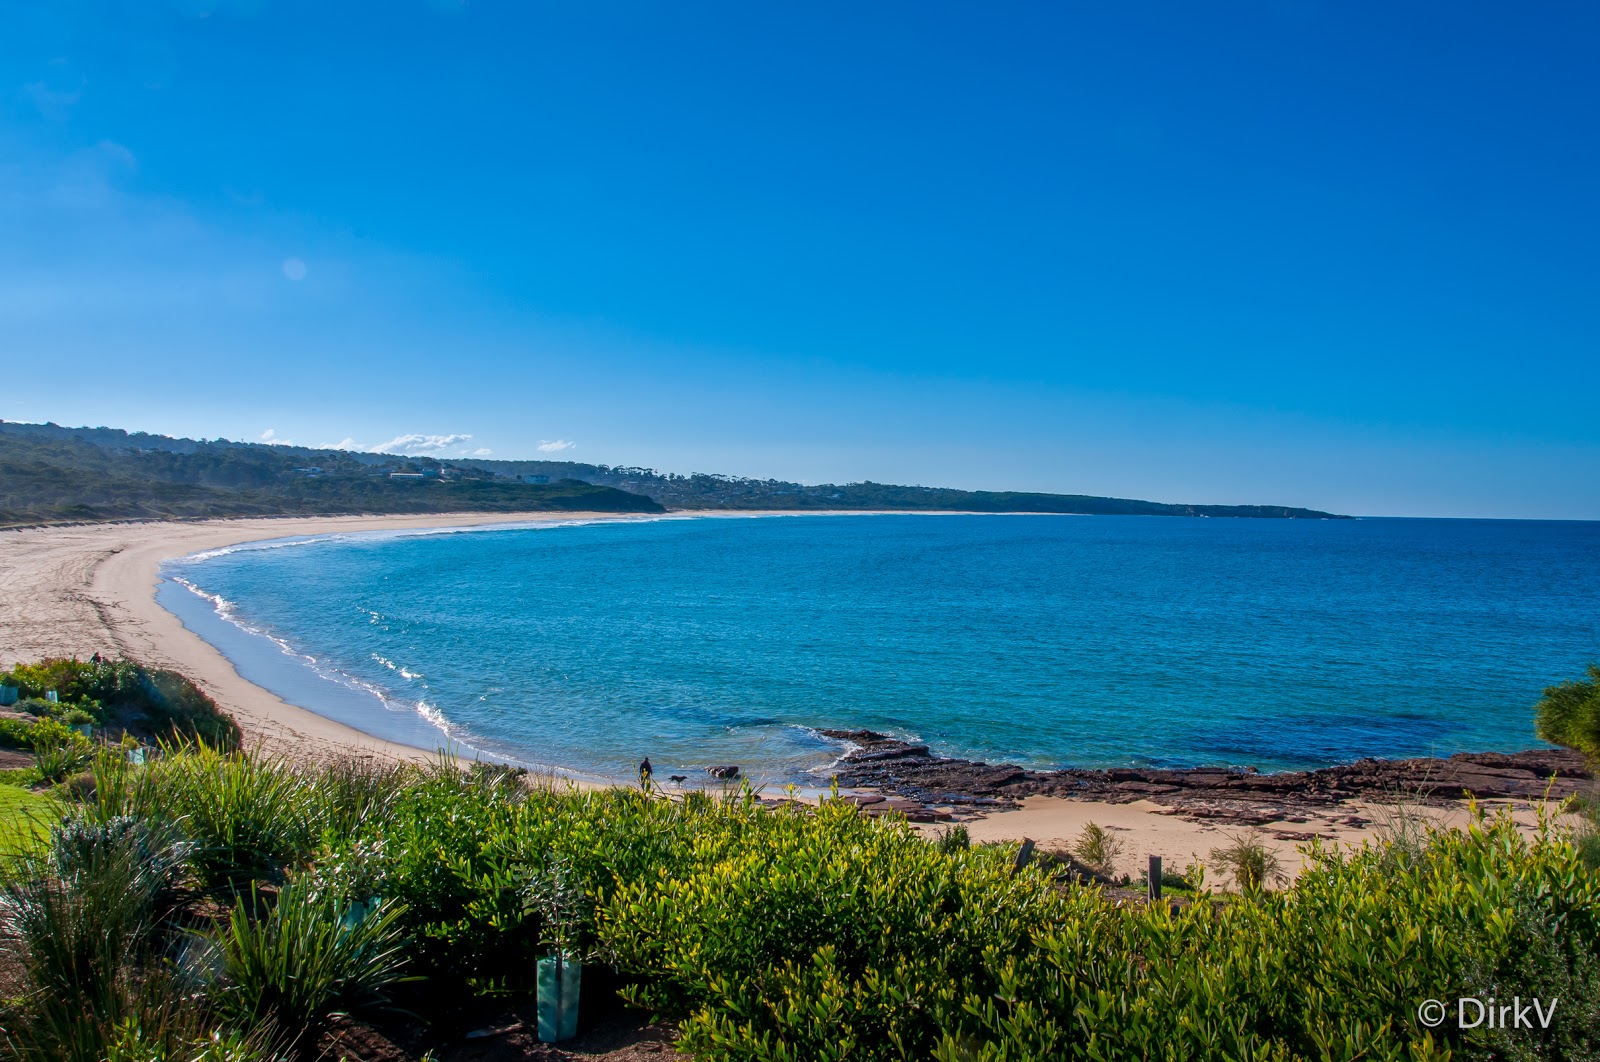 Foto de Short Point Beach - lugar popular entre os apreciadores de relaxamento